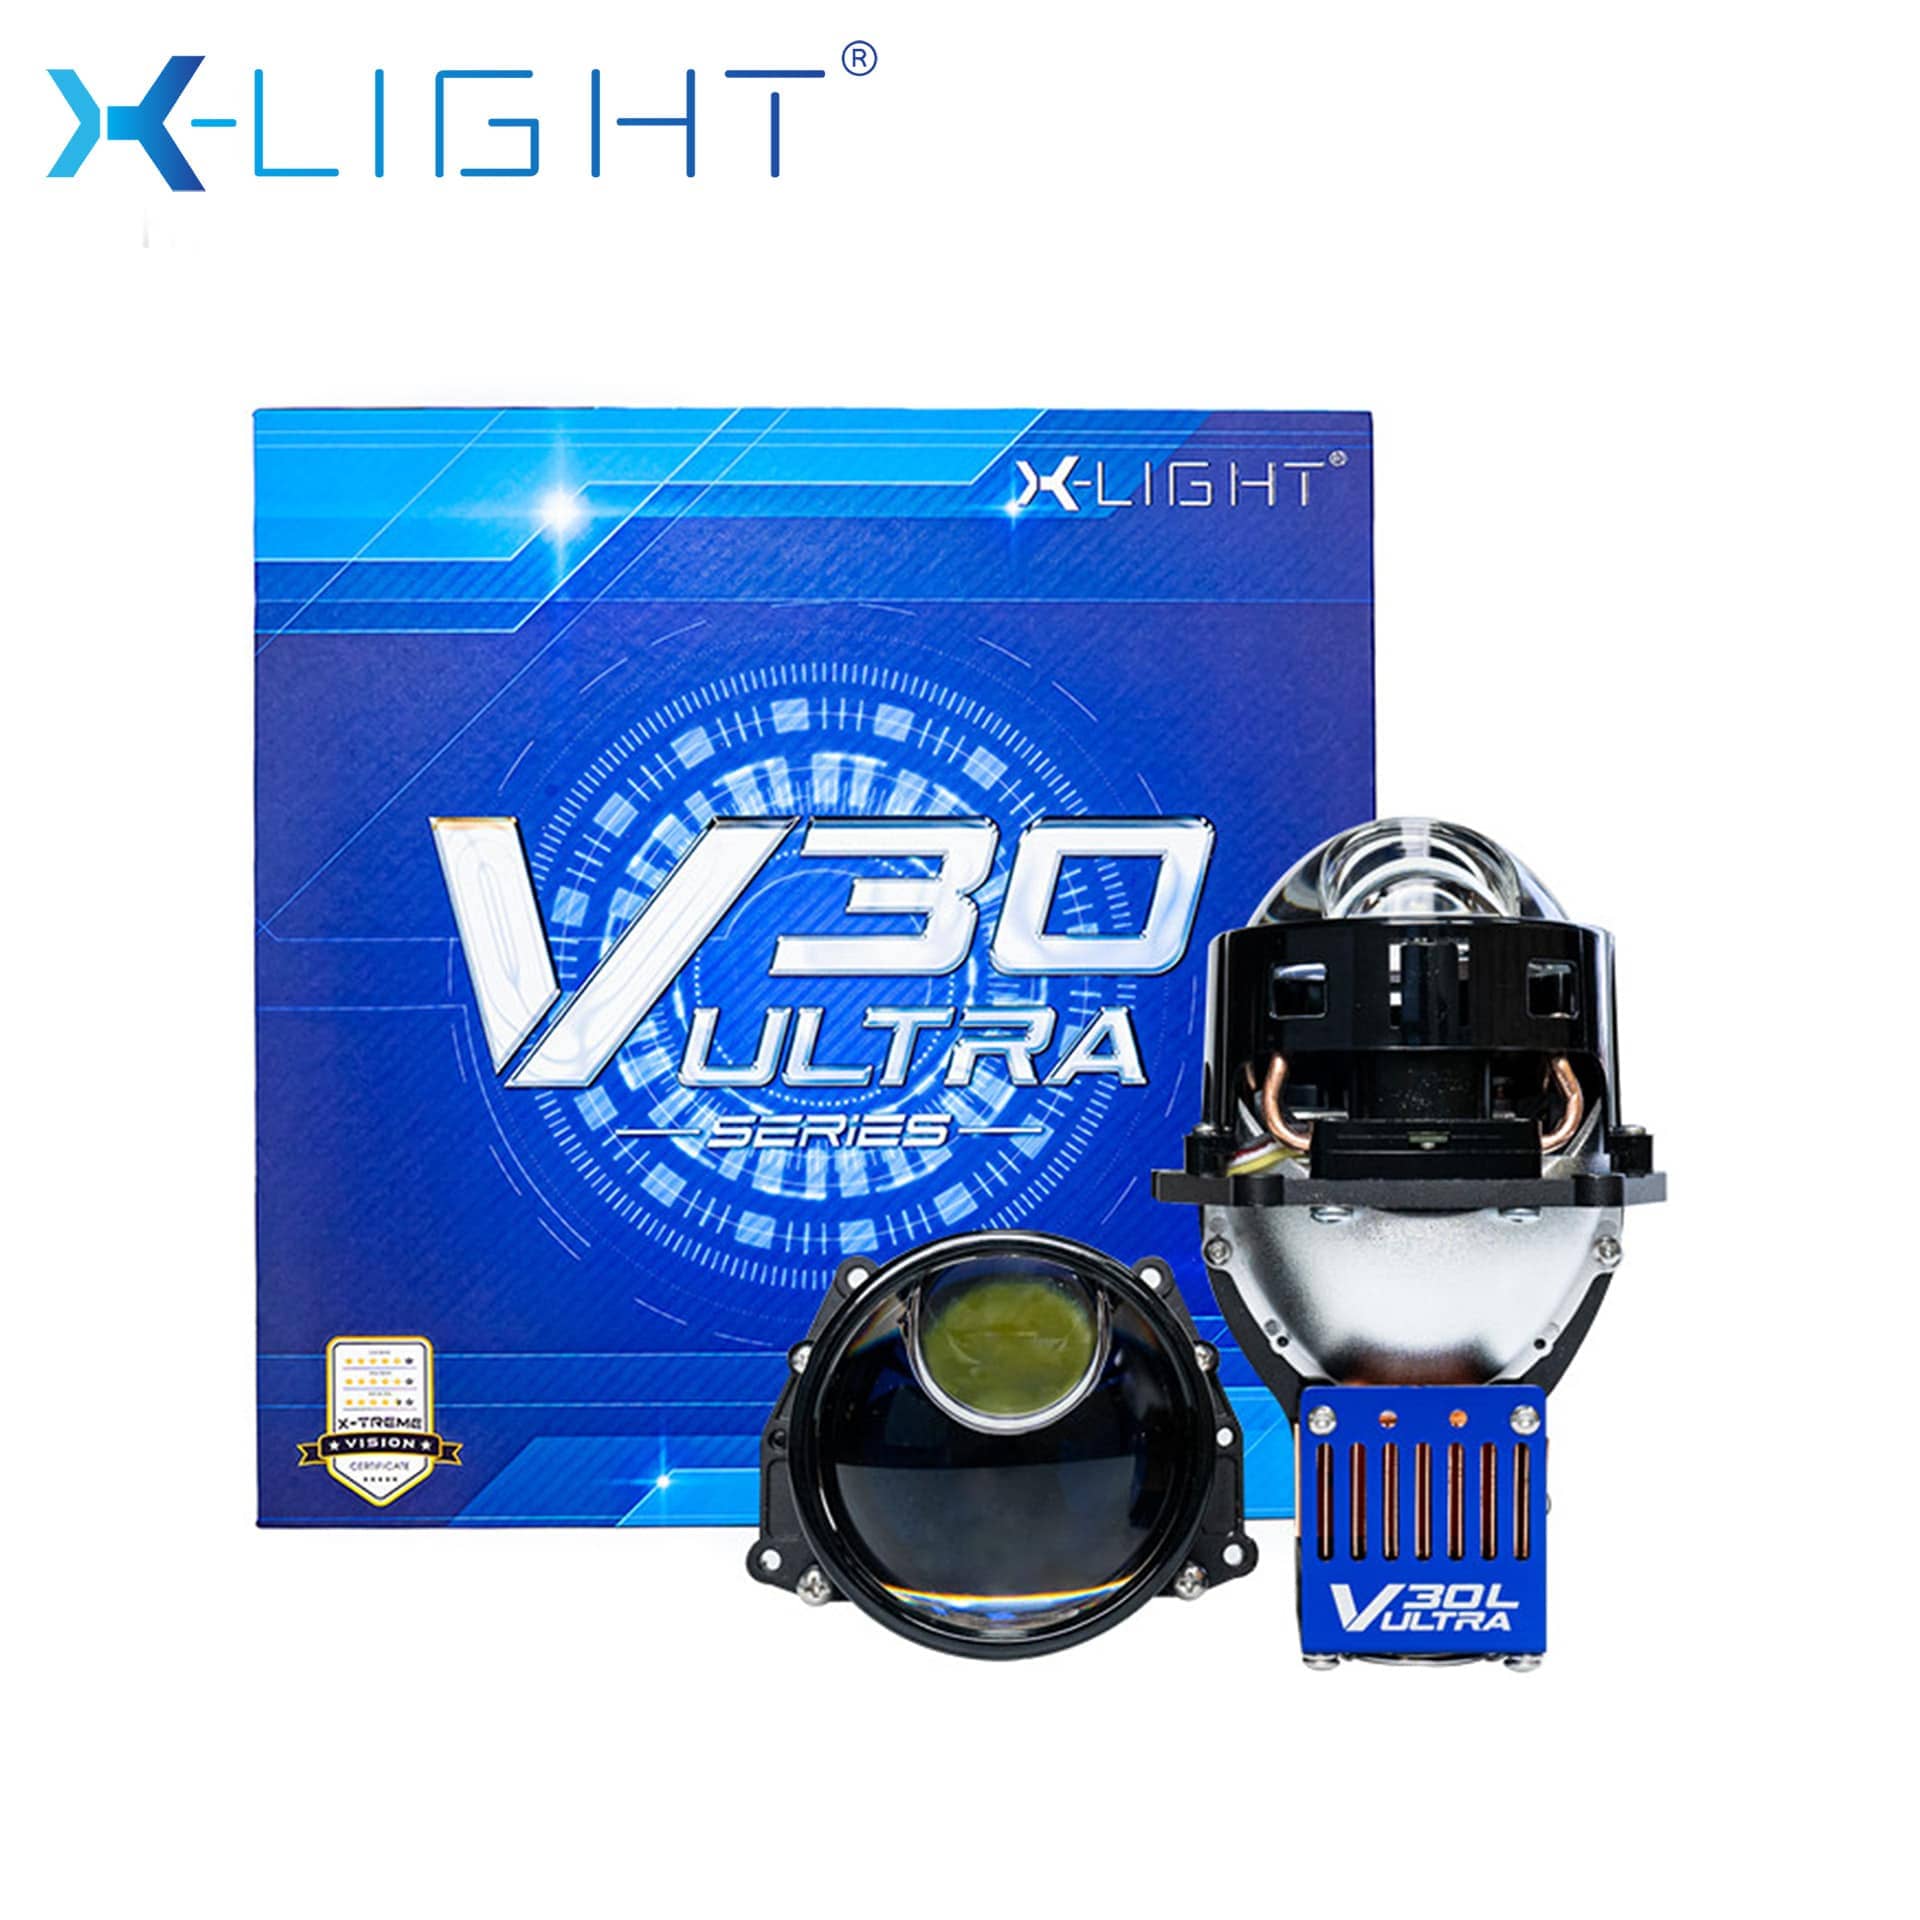 BI LASER X-LIGHT V30L ULTRA 2022